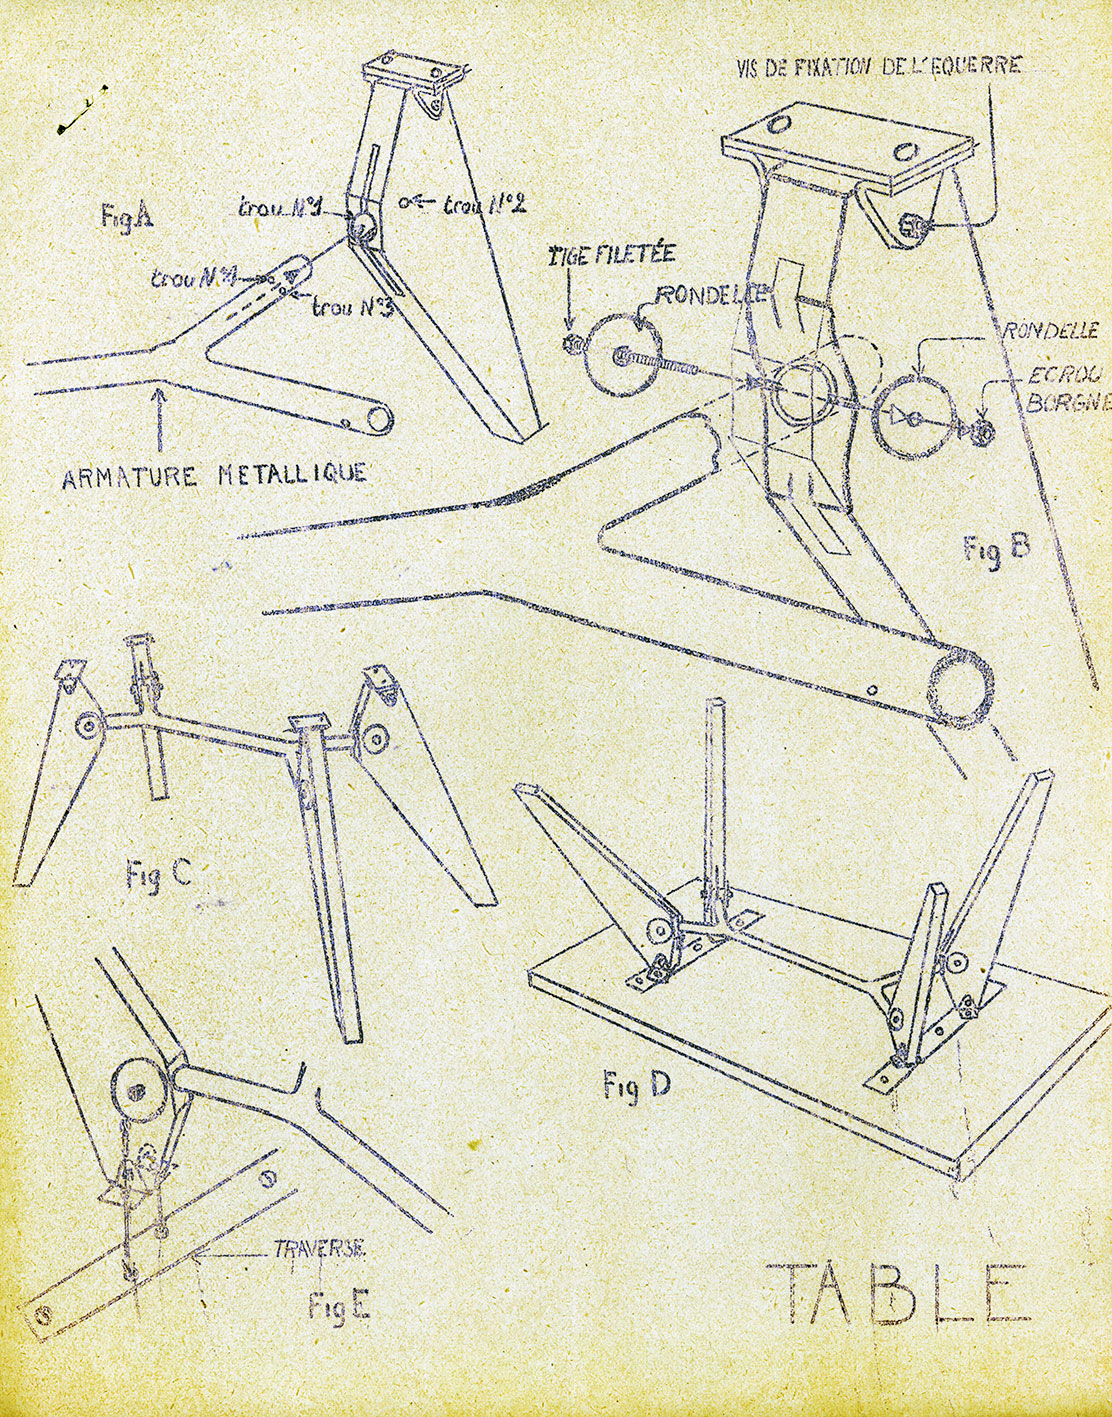 S.A.M. no. 502 table. Ateliers Jean Prouvé assembly intructions, ca. 1951.